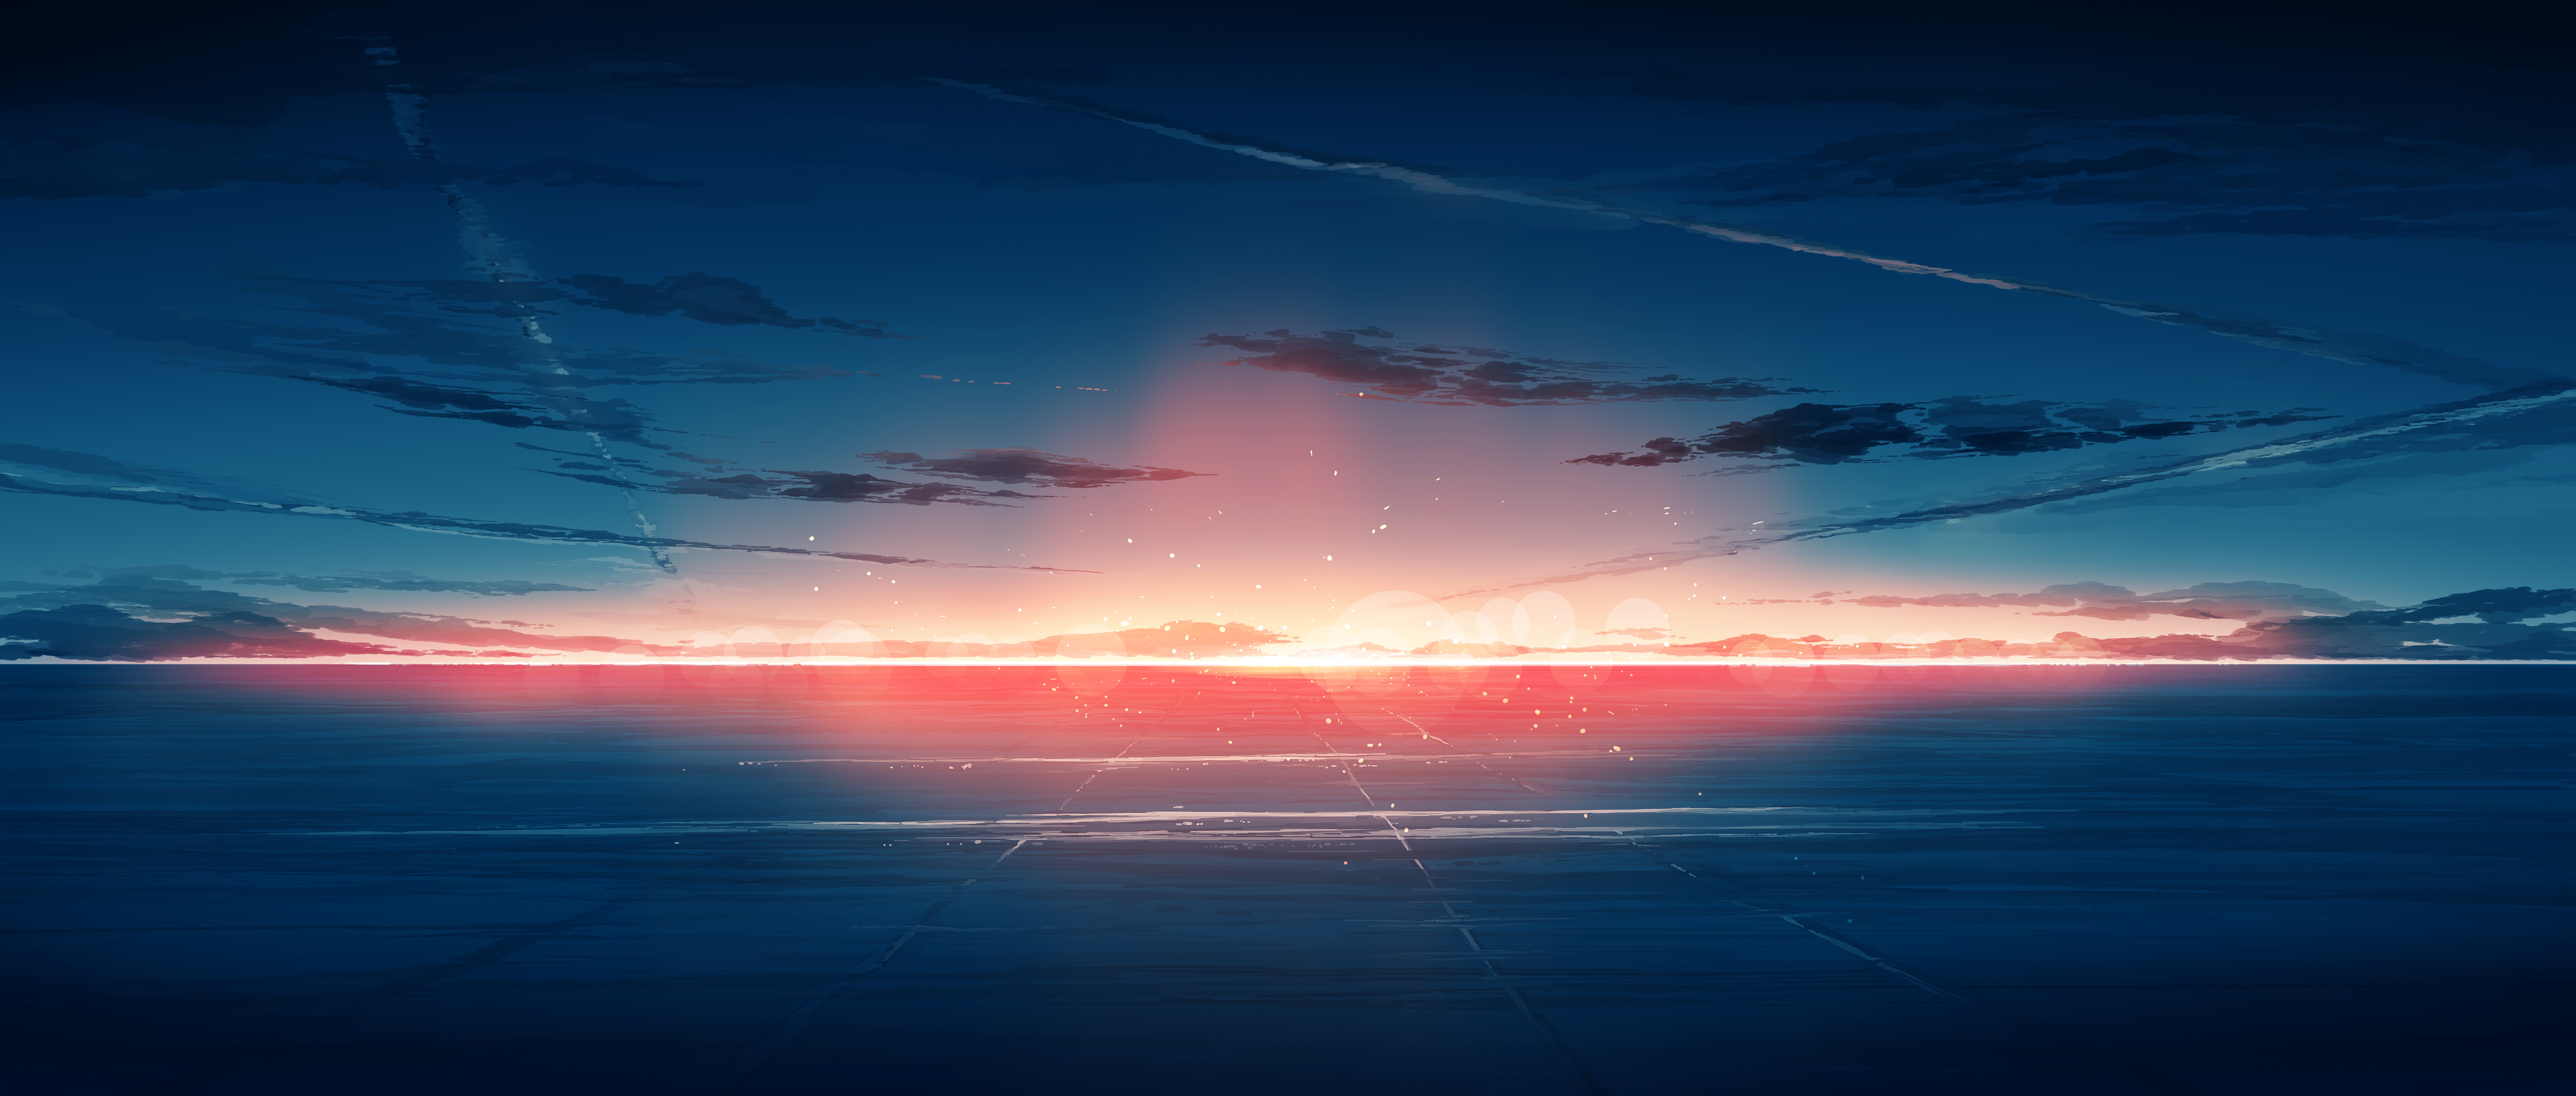 General 5640x2400 Gracile digital art artwork wide screen sunset landscape clouds blue